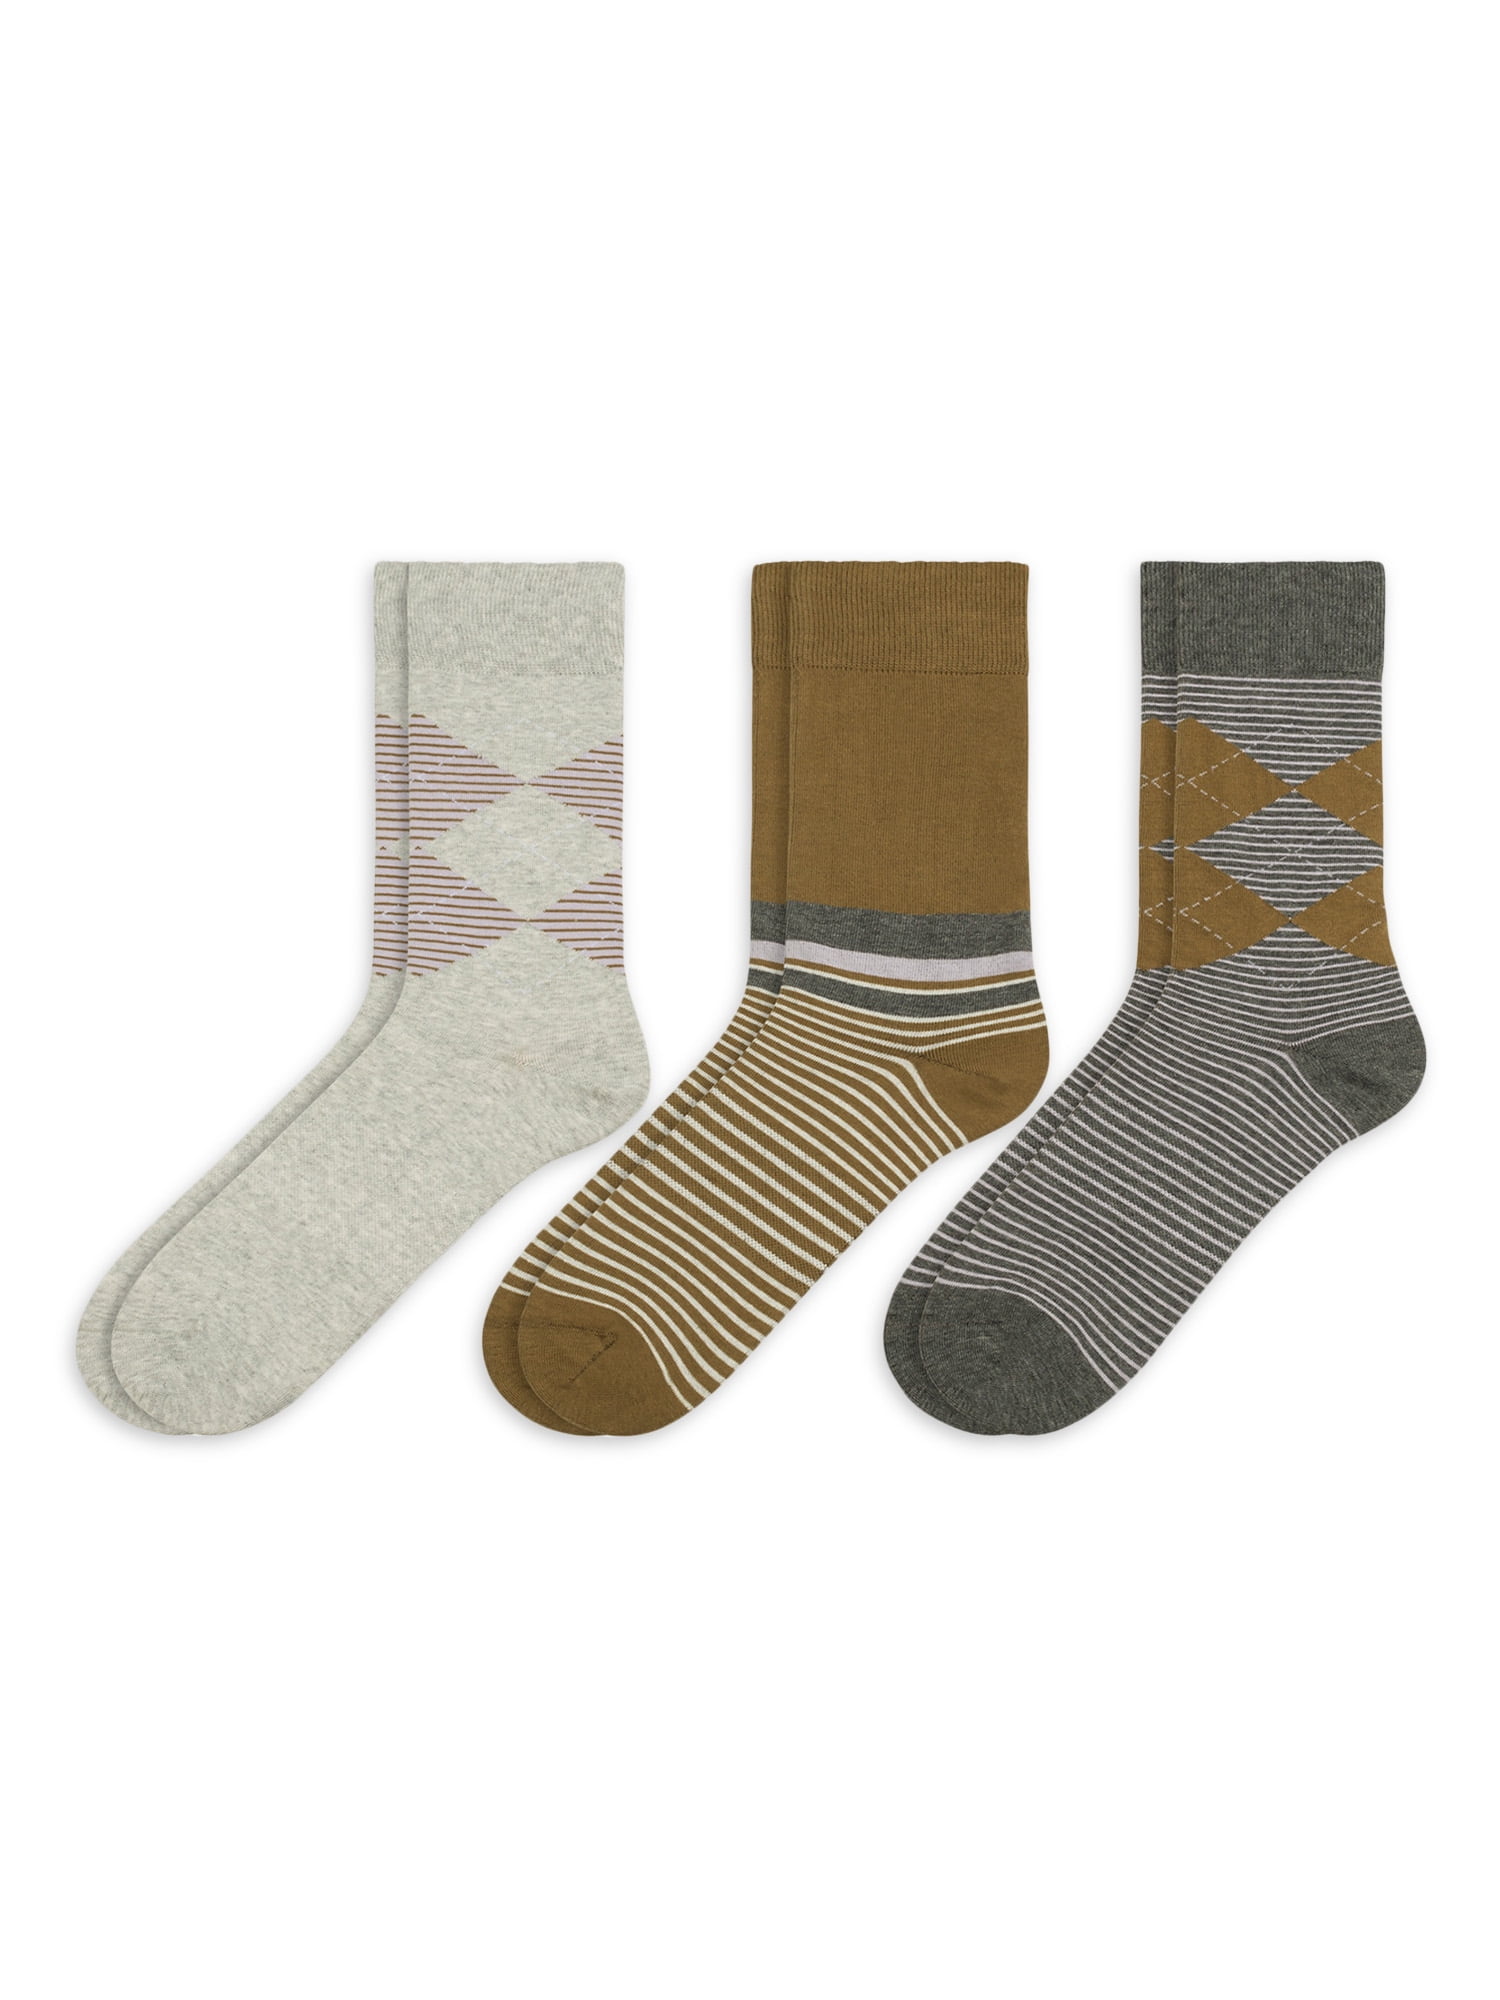 George Men's Combed Cotton Patterned Crew Socks ,3 Pack - Walmart.com